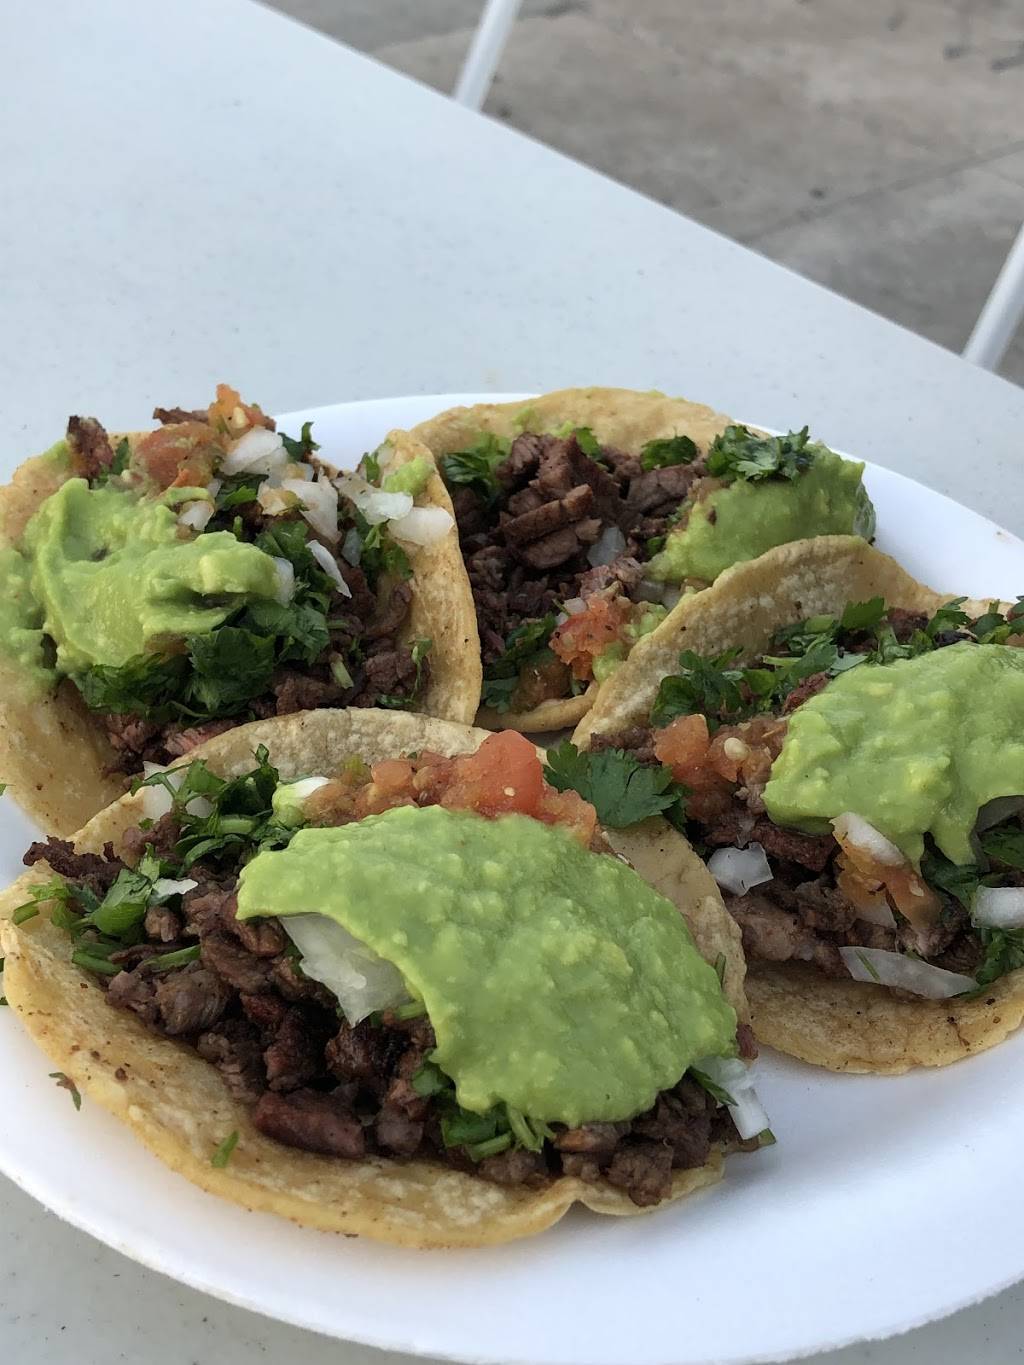 La’s tacos | 3601 S Avalon Blvd, Los Angeles, CA 90011, USA | Phone: (213) 440-4714